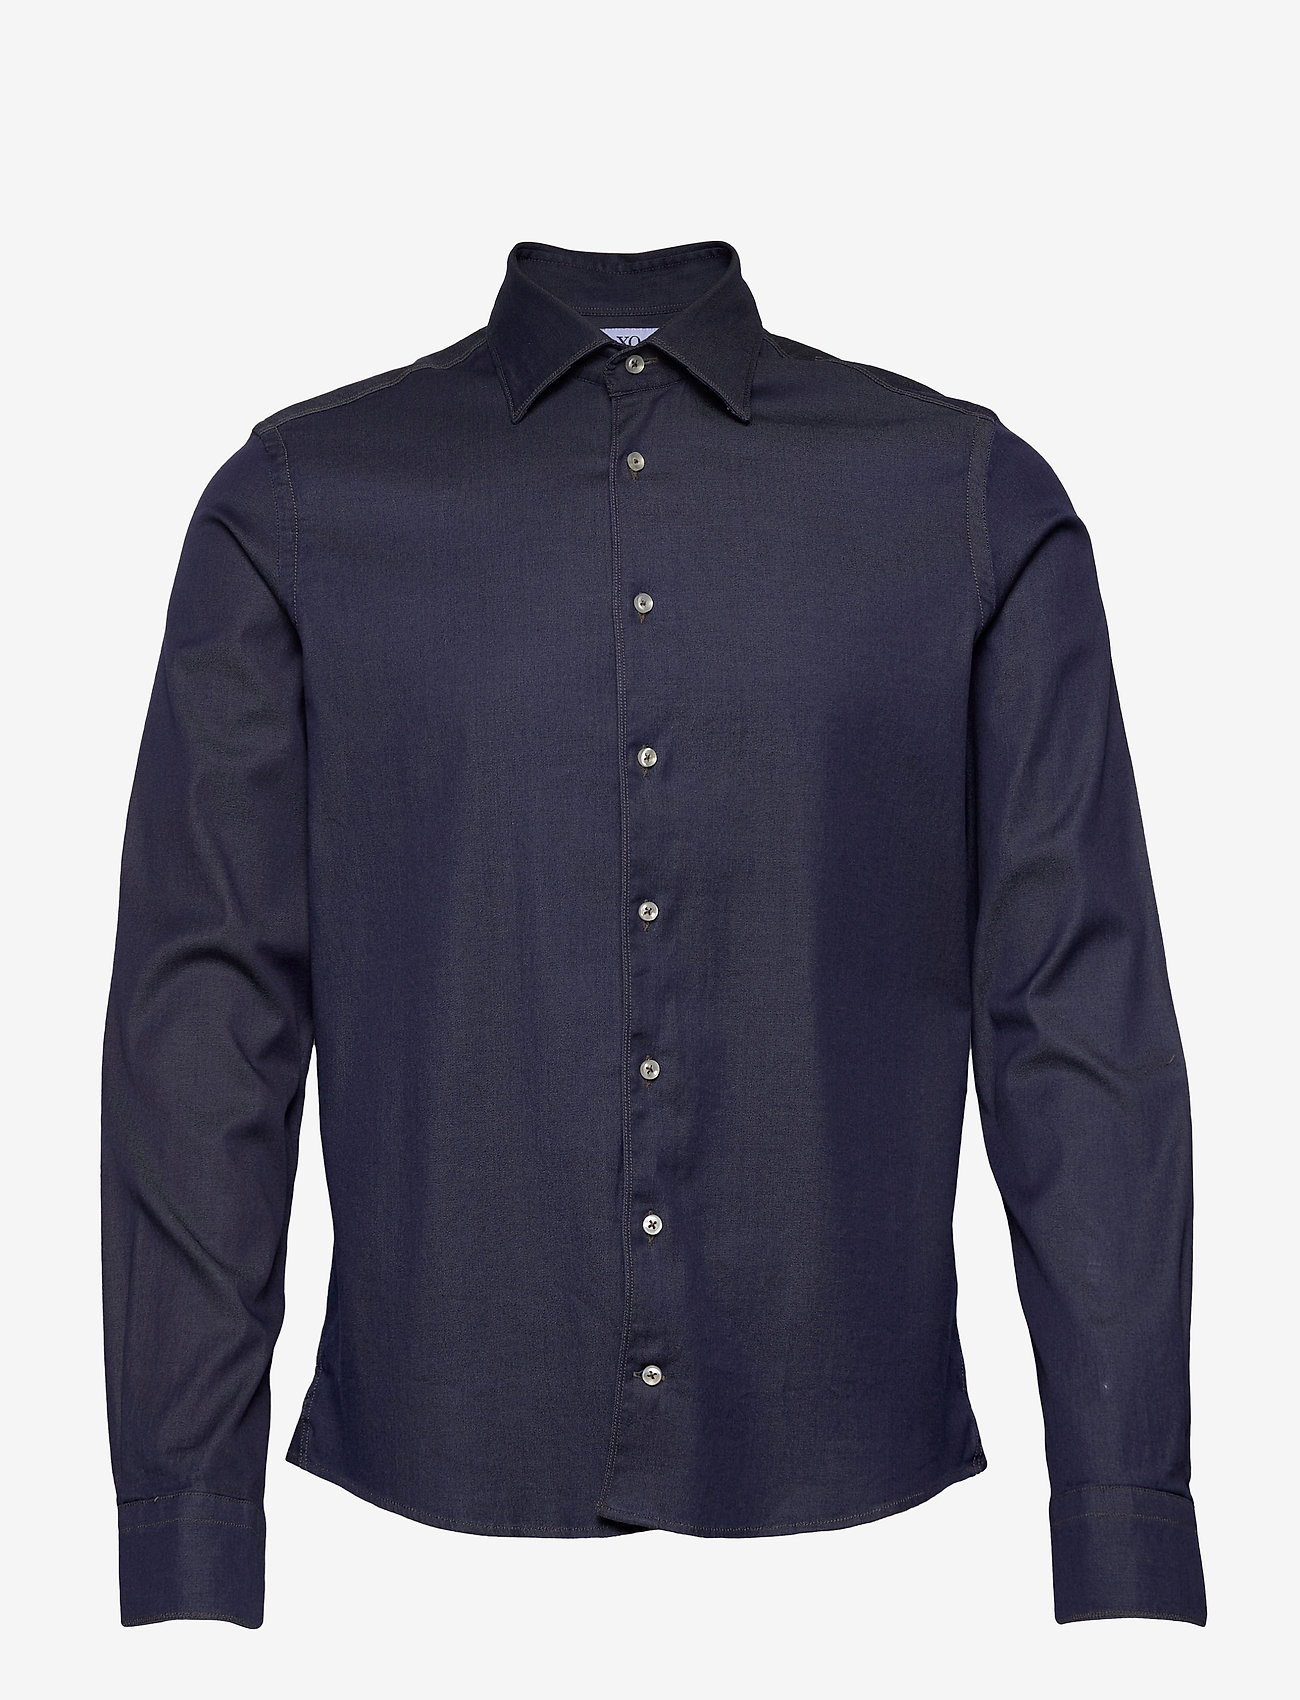 XO Shirtmaker by Sand Copenhagen - 8611 - Jacky SC - medium blue - 0